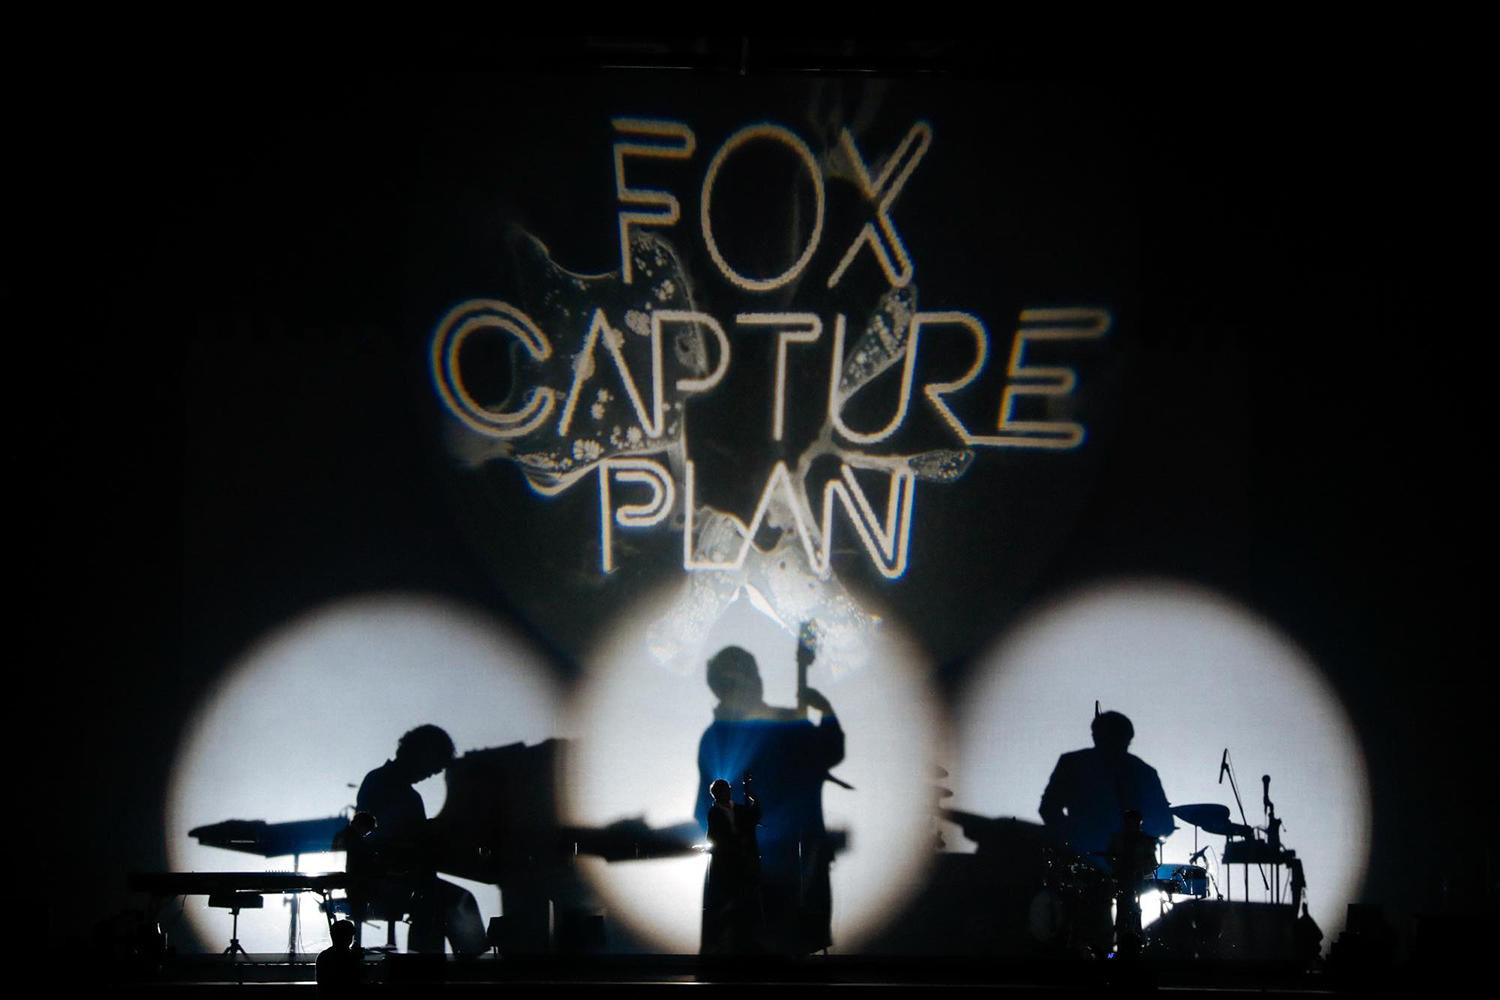 fox capture plan、東京国際フォーラム公演のライヴ写真が到着。年末ブルーノート公演も決定！